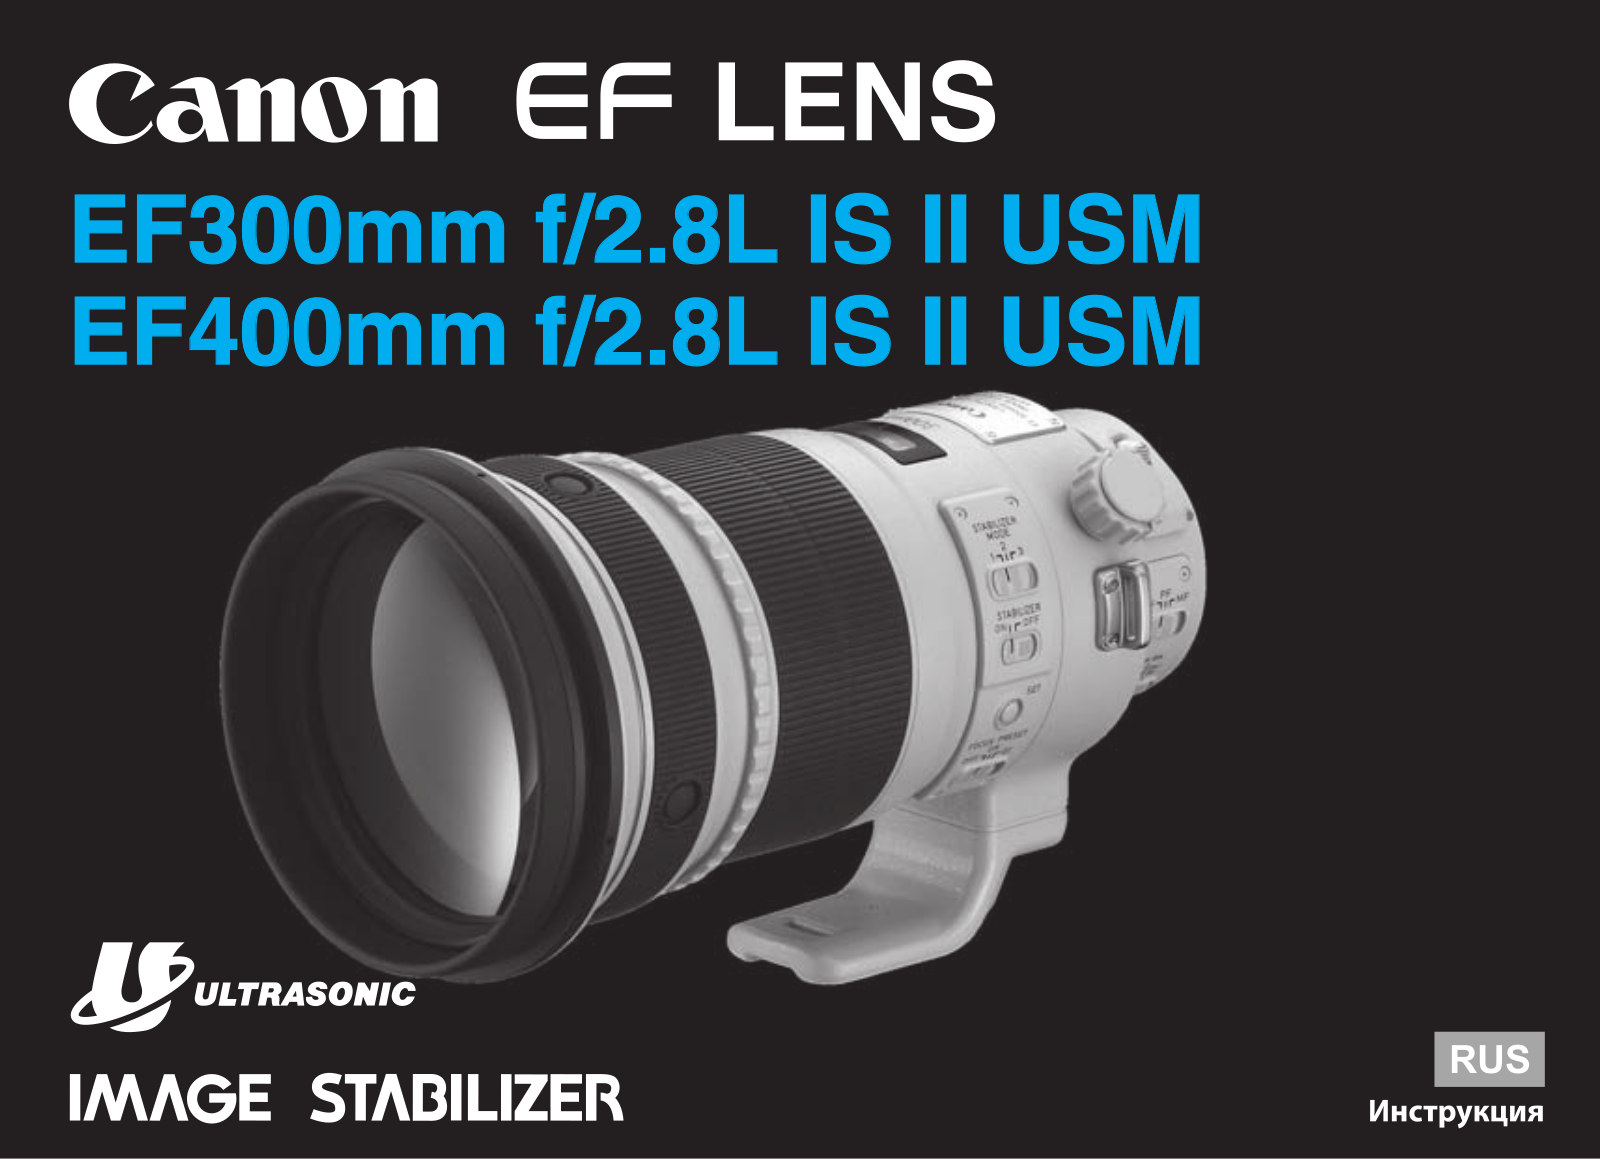 Canon EF 400mm f/2.8L IS II USM, EF 300mm f/2.8L IS II USM User Manual